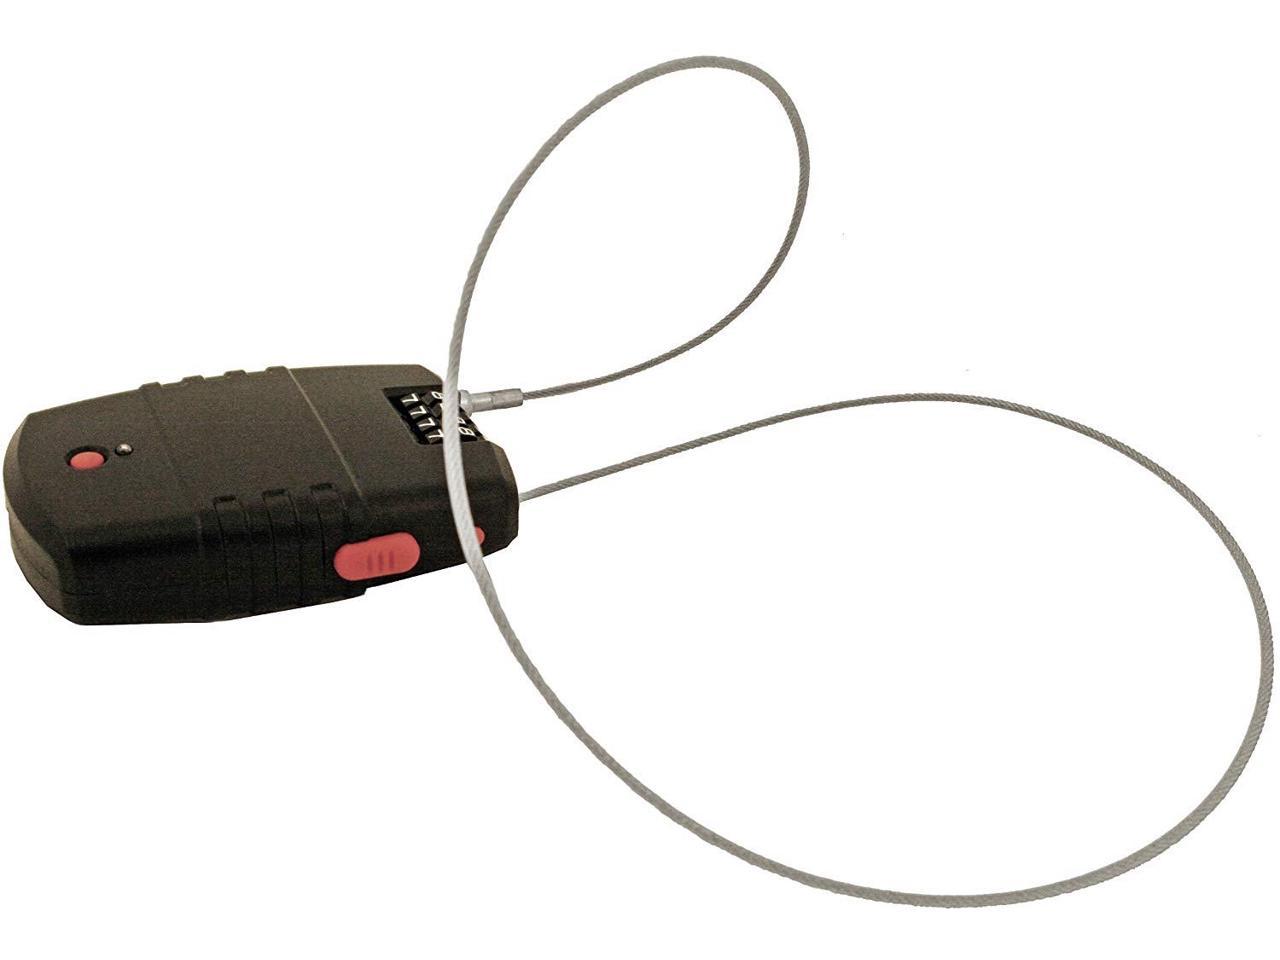 EyezOff Retractable Cable Lock, 4-Dial Lock, Motion Sensor Alarm (dia 2.0mm x 60cm) incl. batteries